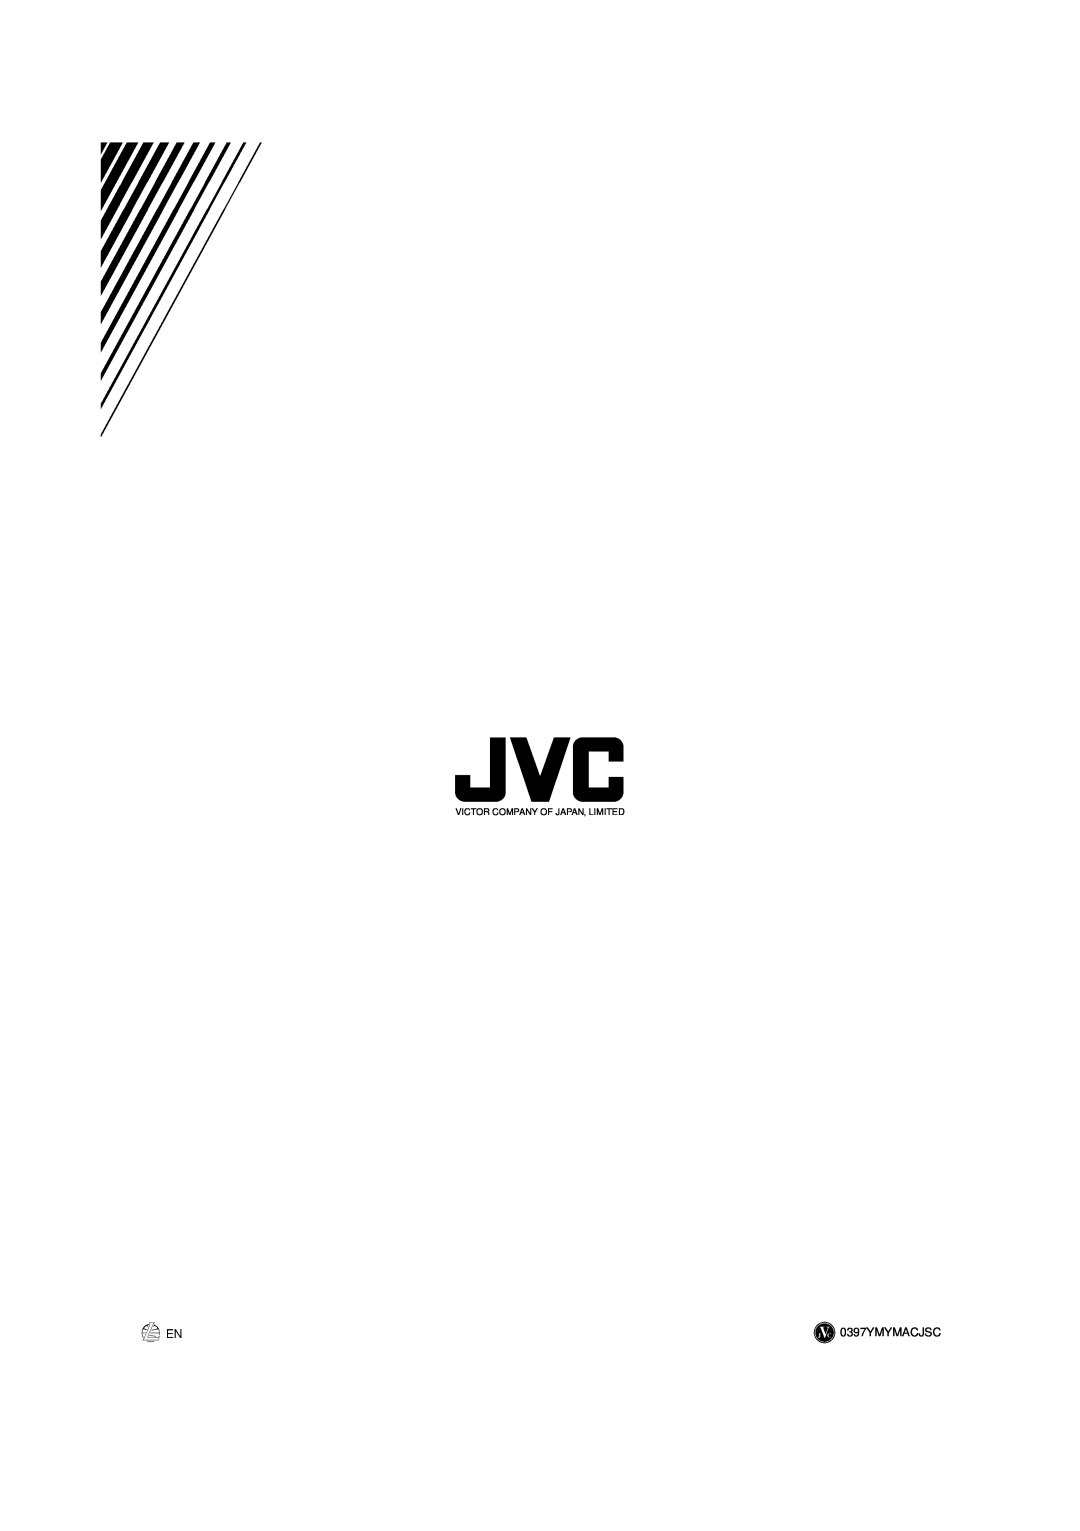 JVC XL-V230BK, XL-V130BK manual 0397YMYMACJSC, Victor Company Of Japan, Limited 